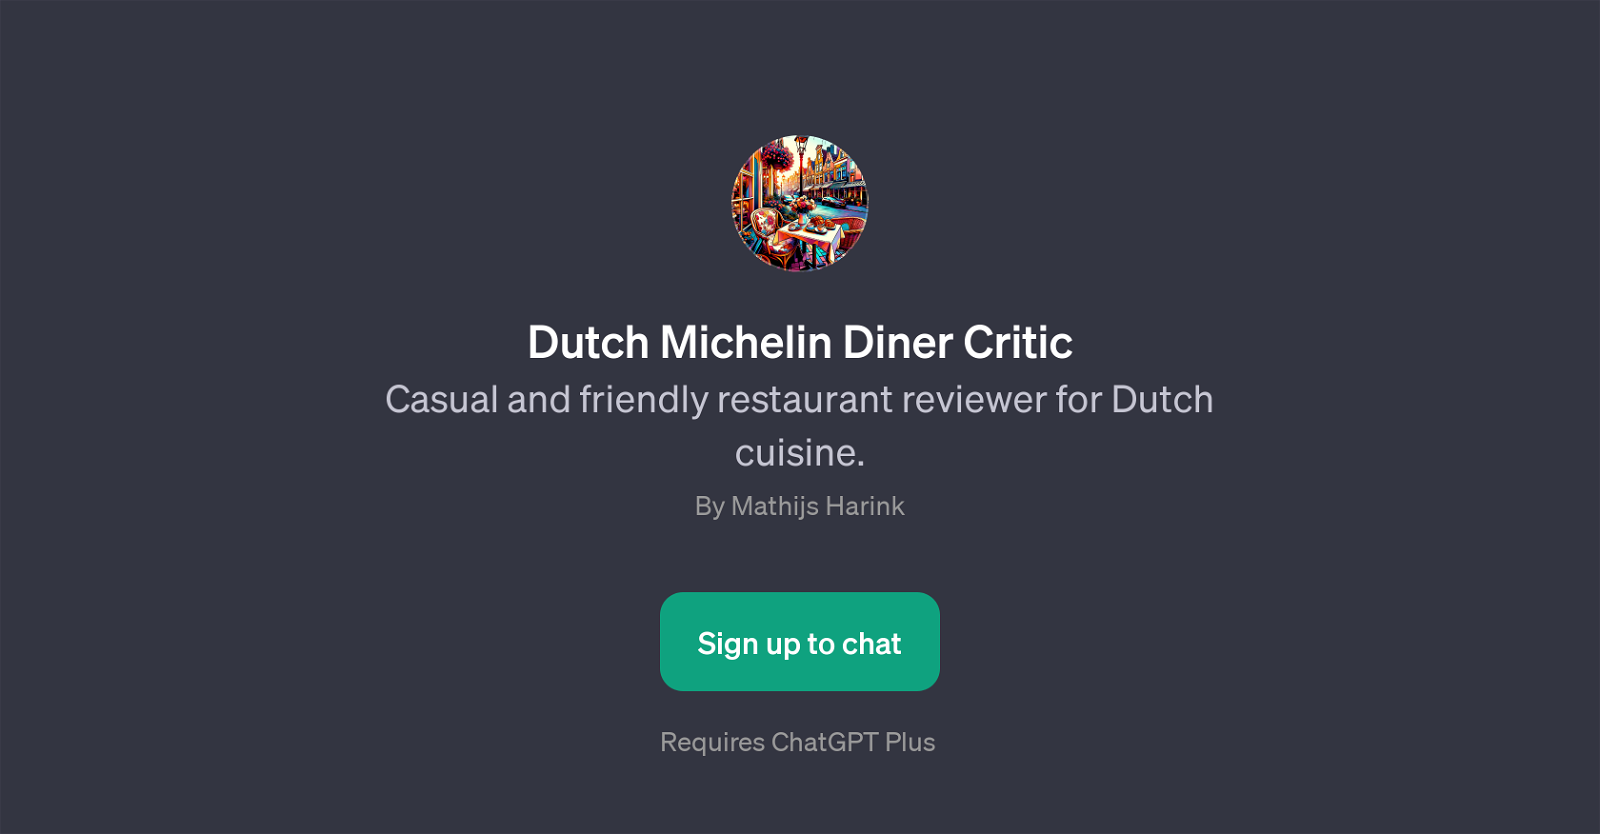 Dutch Michelin Diner Critic website